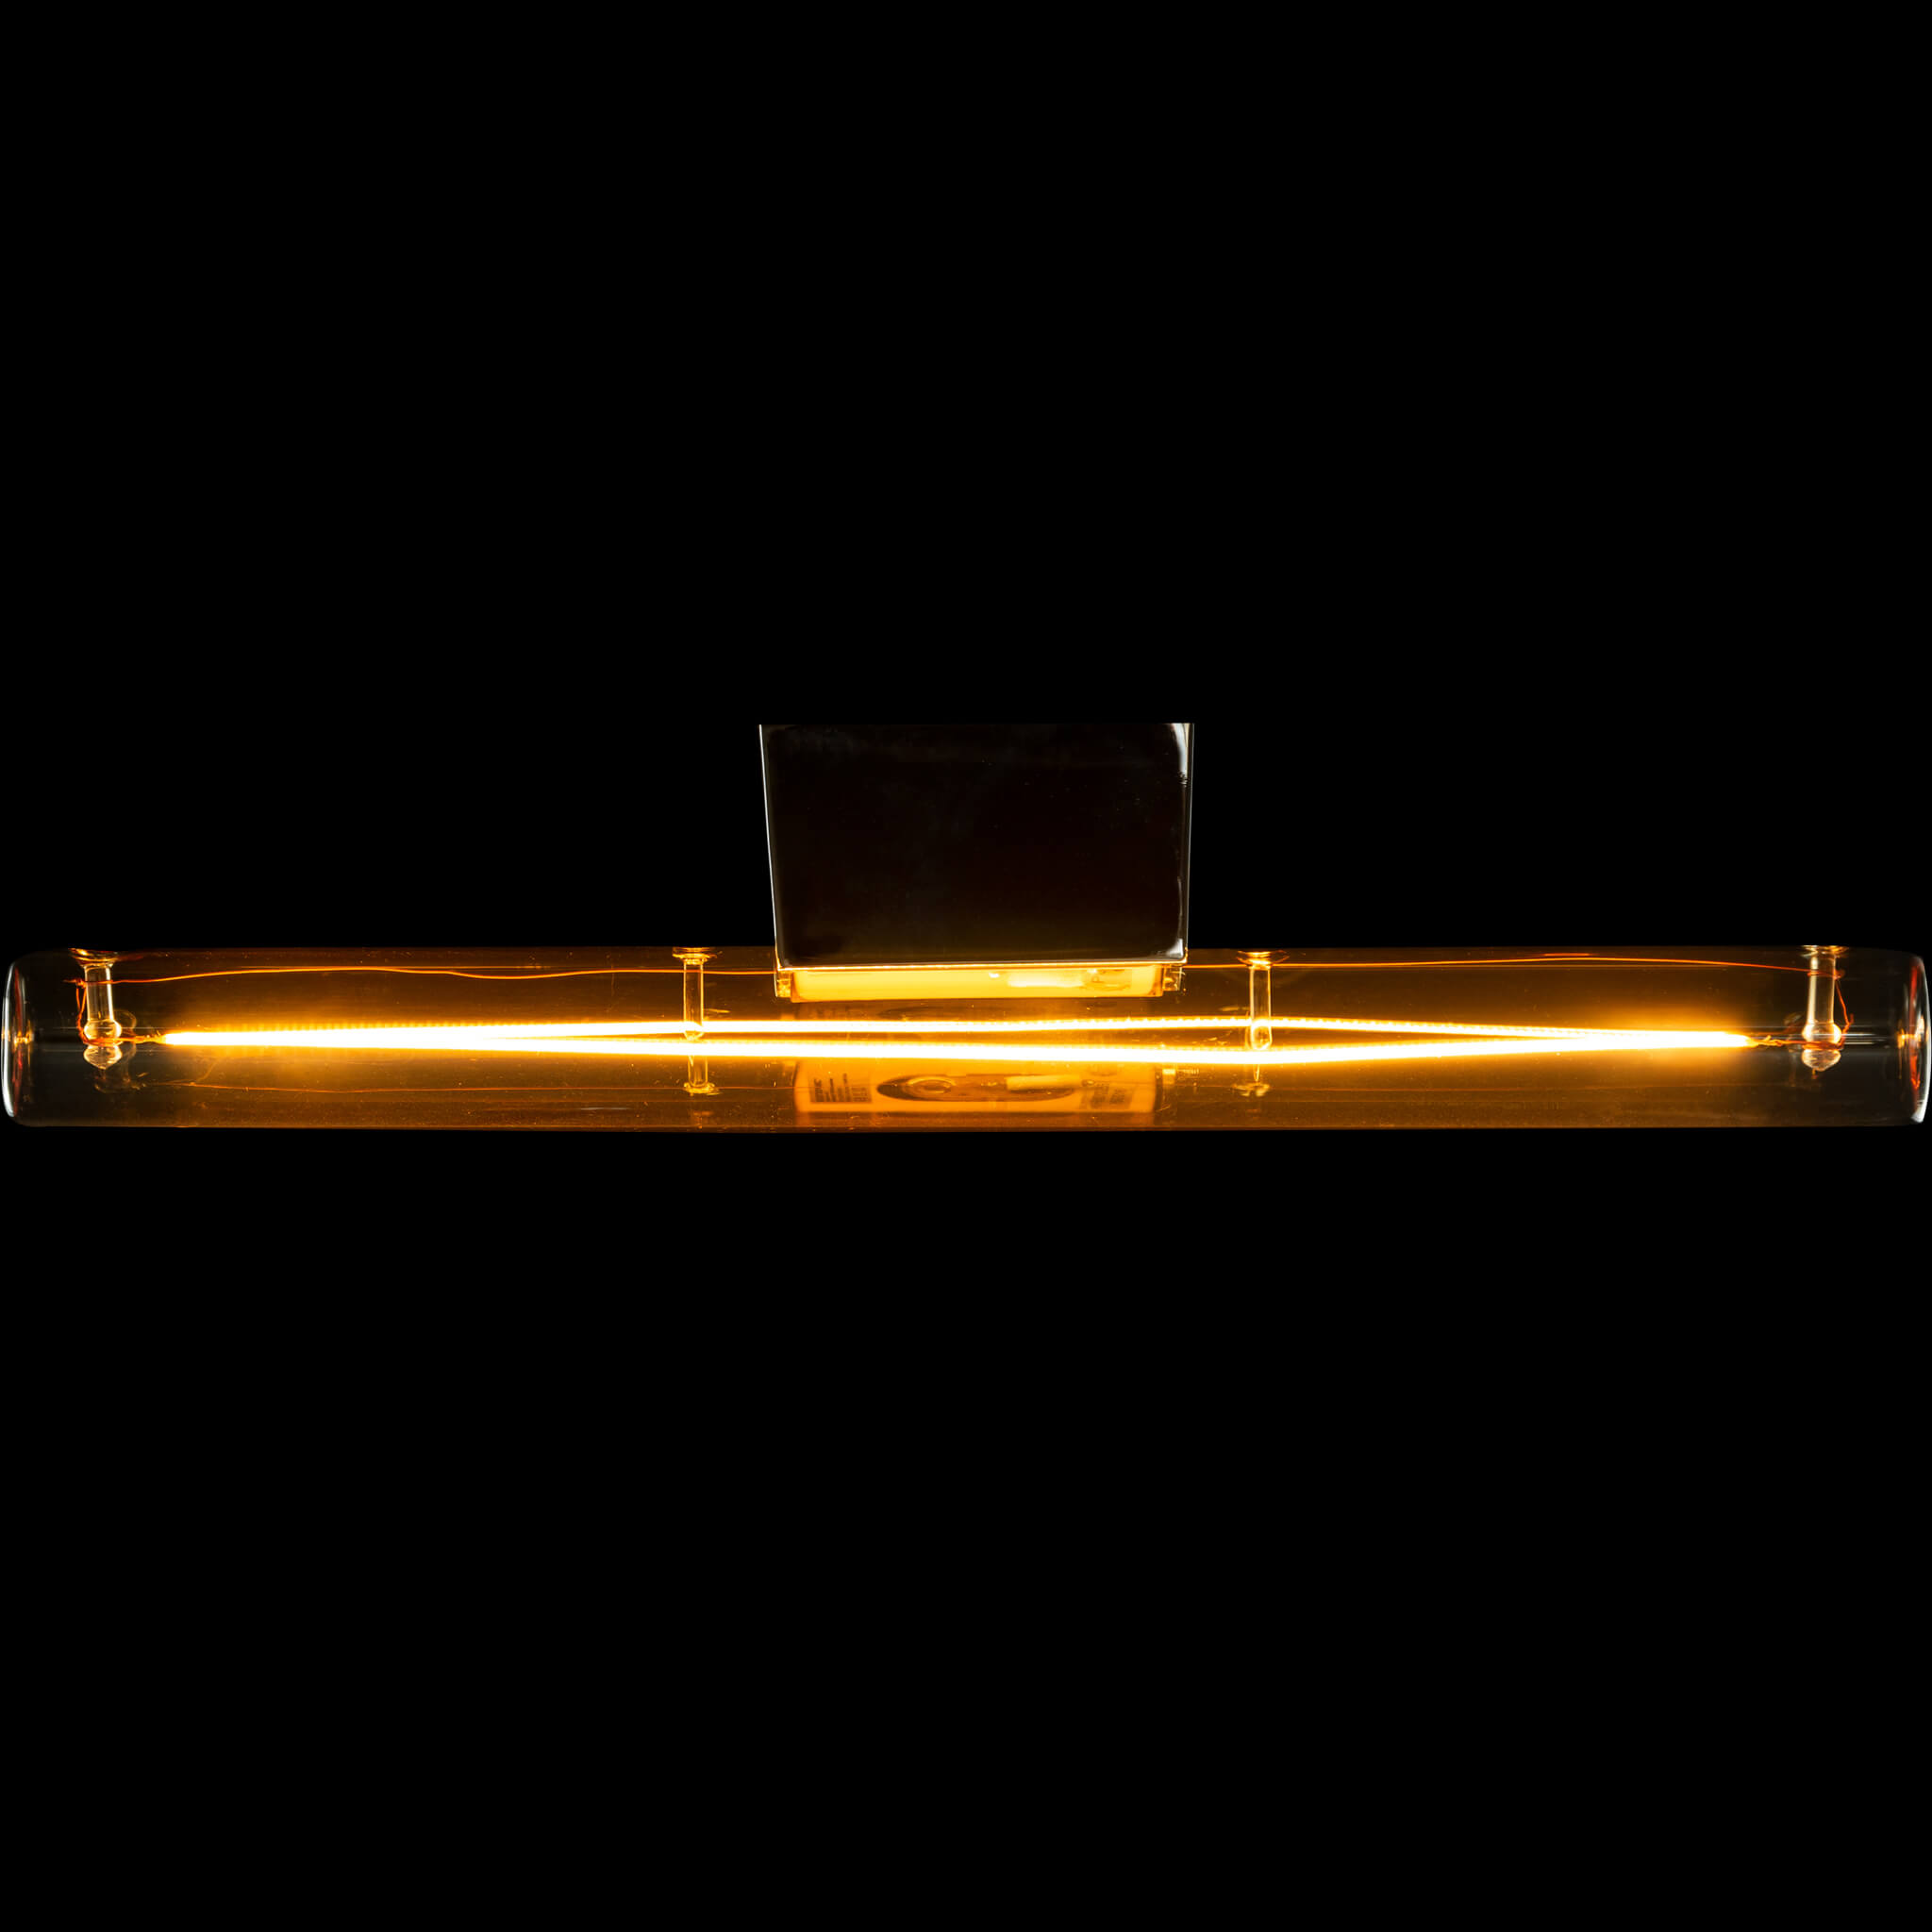 LED Linienlampe 300mm gold | SEGULA